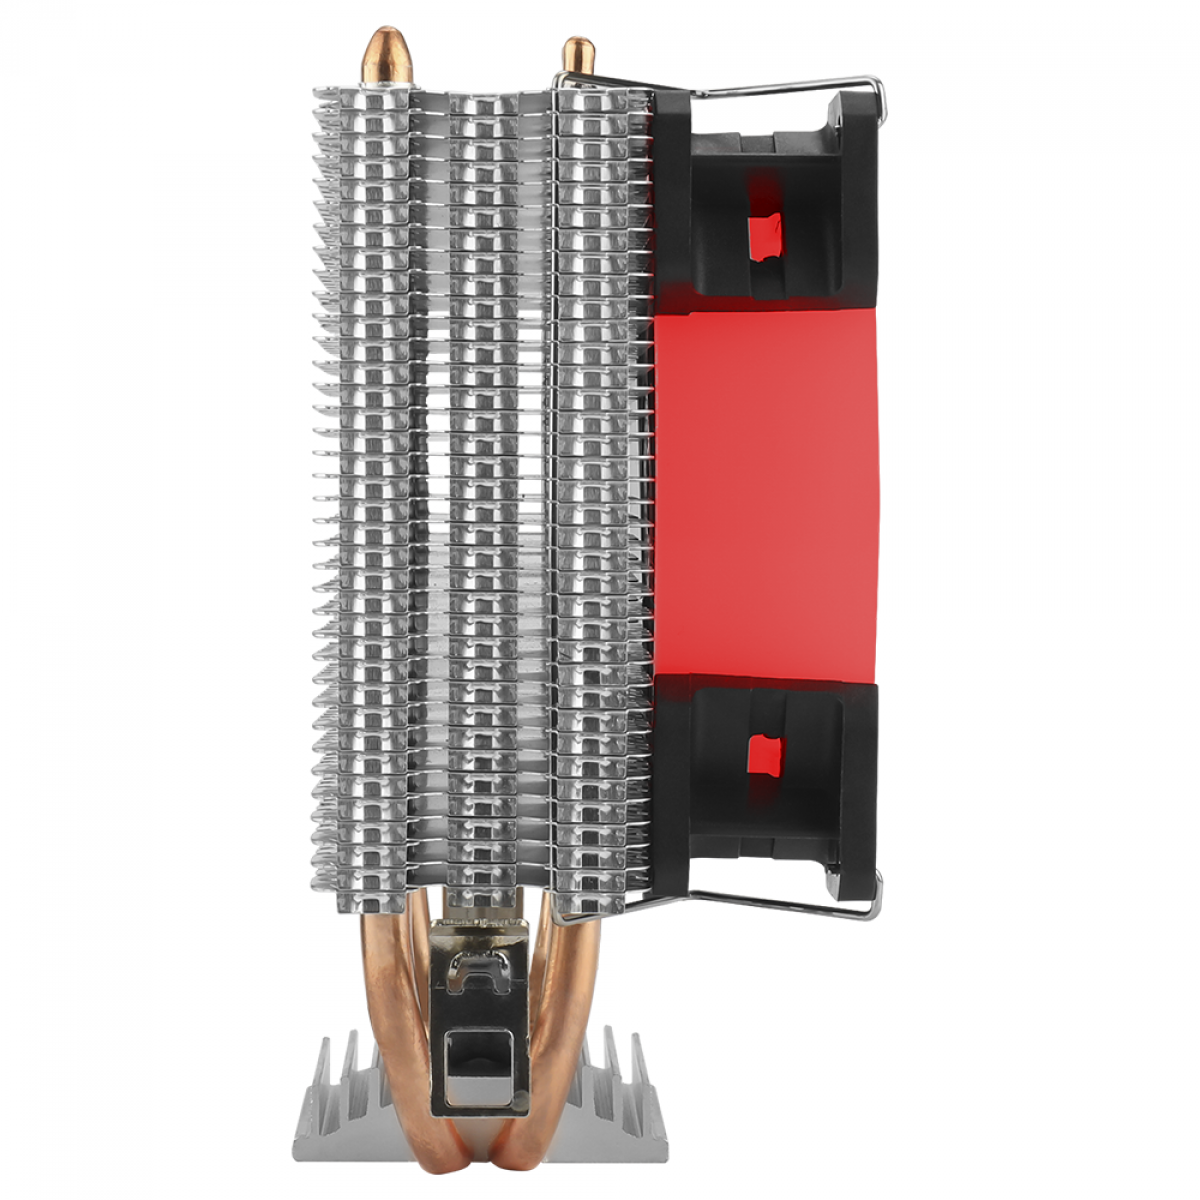 Cooler para Processador T-Dagger Idun R, 90mm, LED Red, Intel-AMD, T-GC9109 R